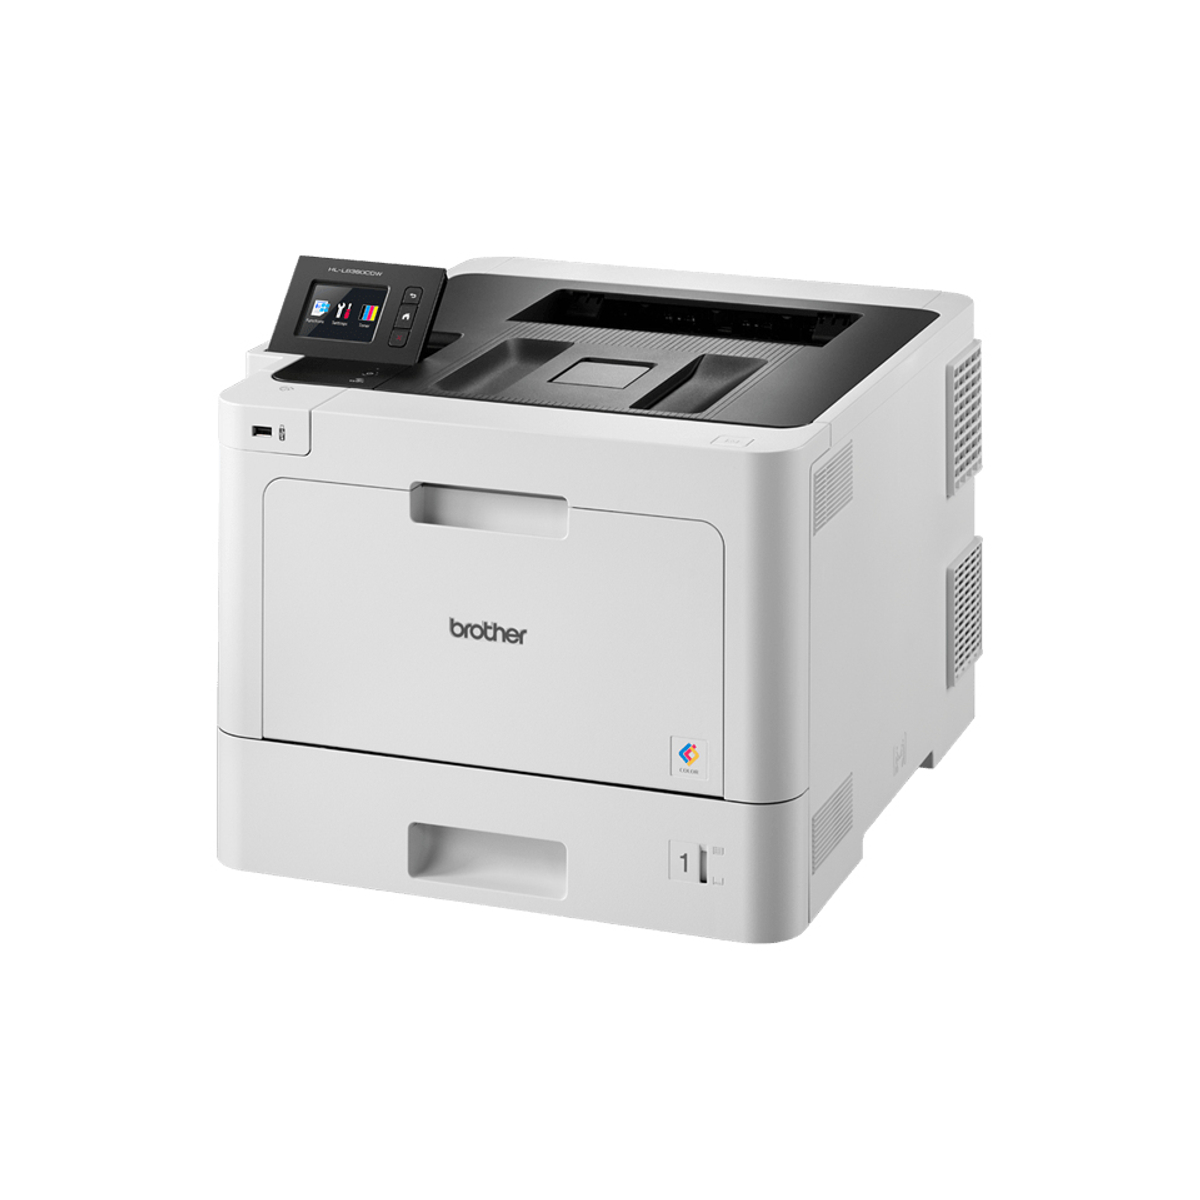 HL-L8360CDW A4 Colour Laser Printer